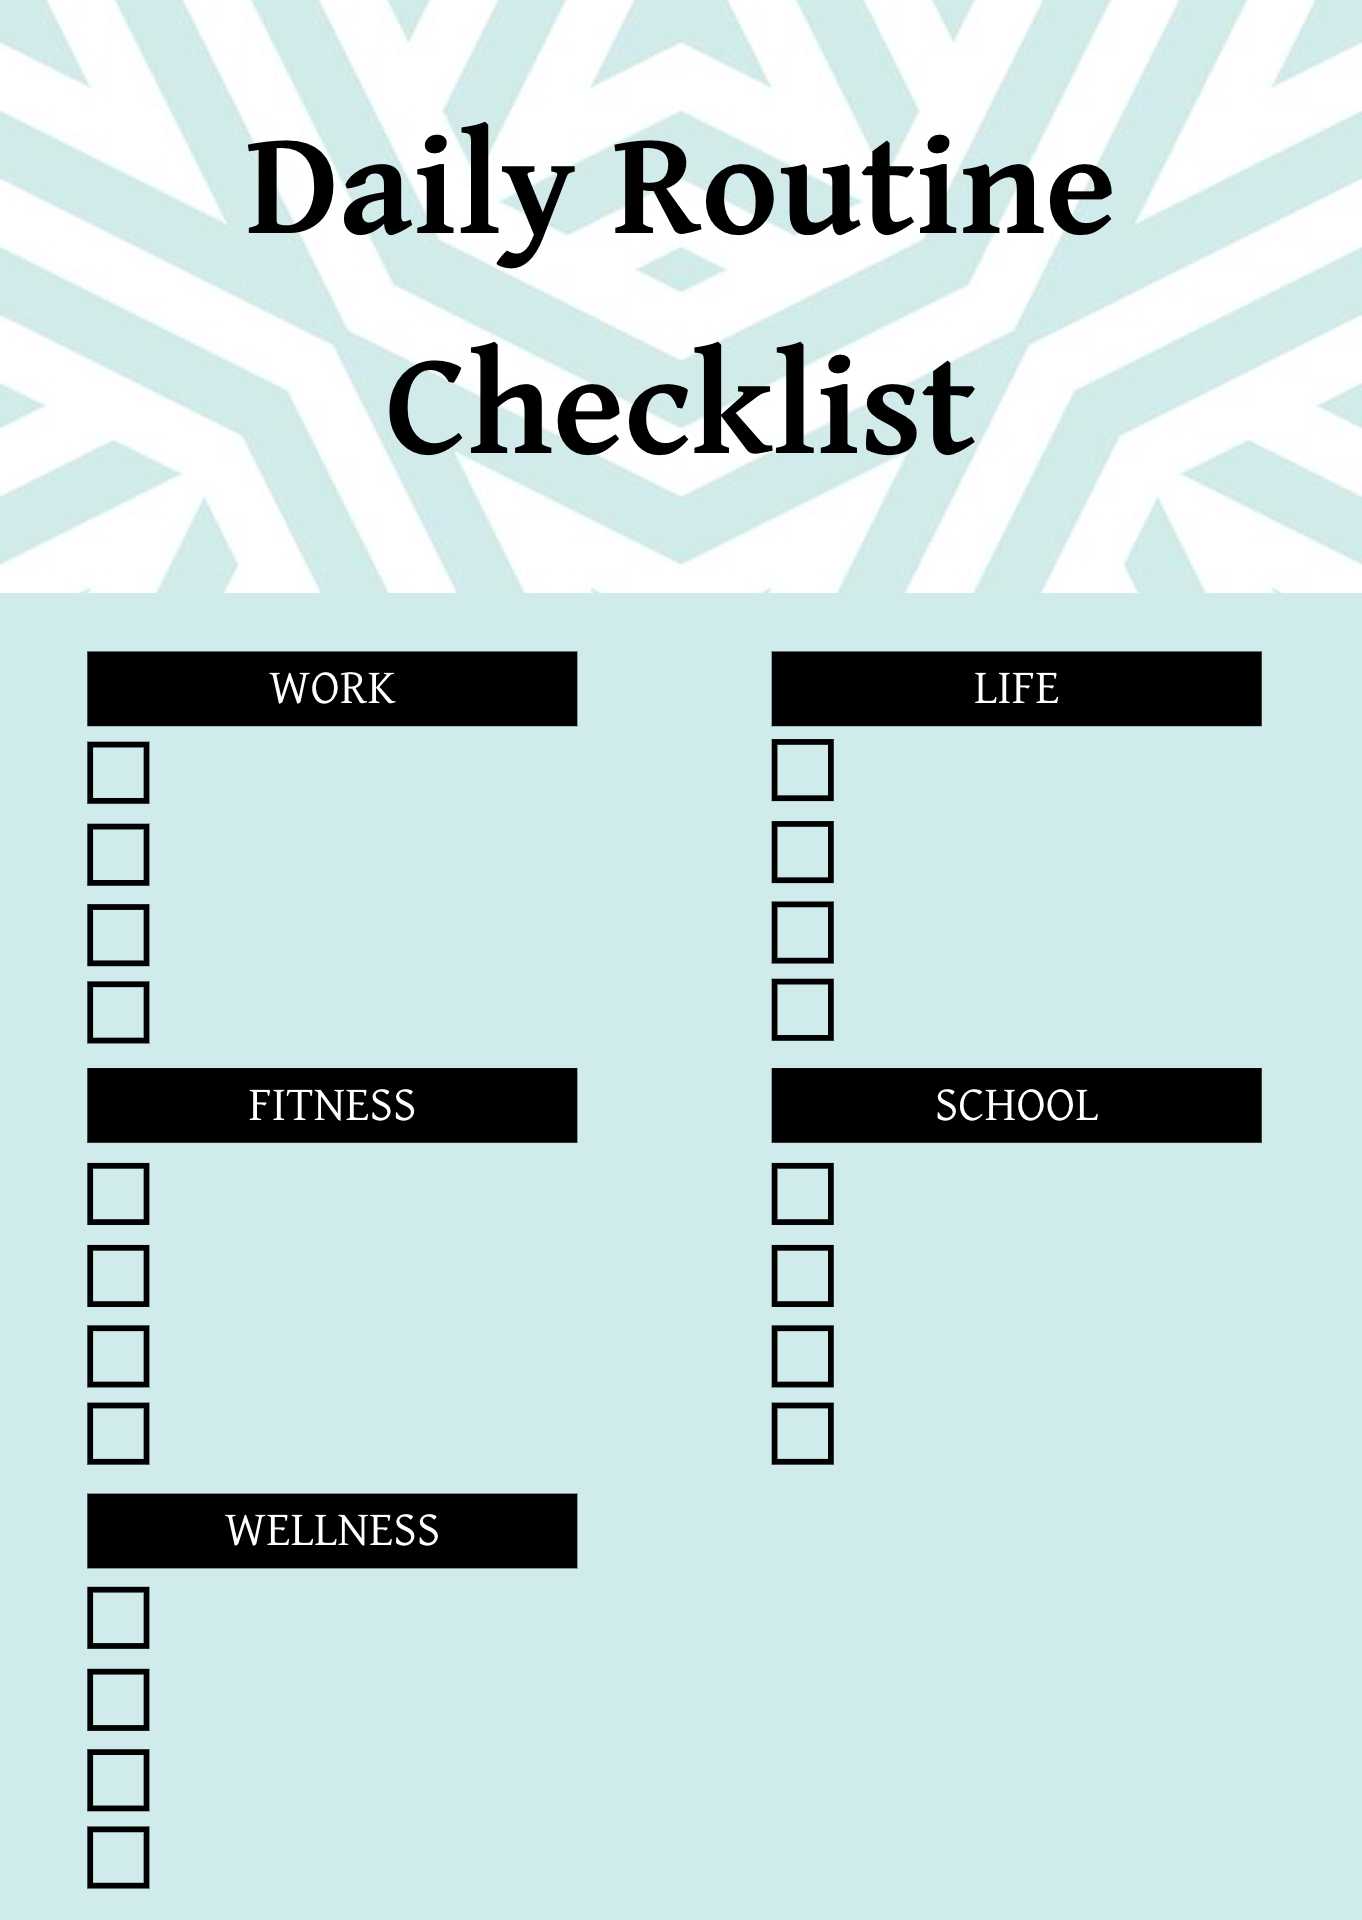 Daily Routine Checklist Template